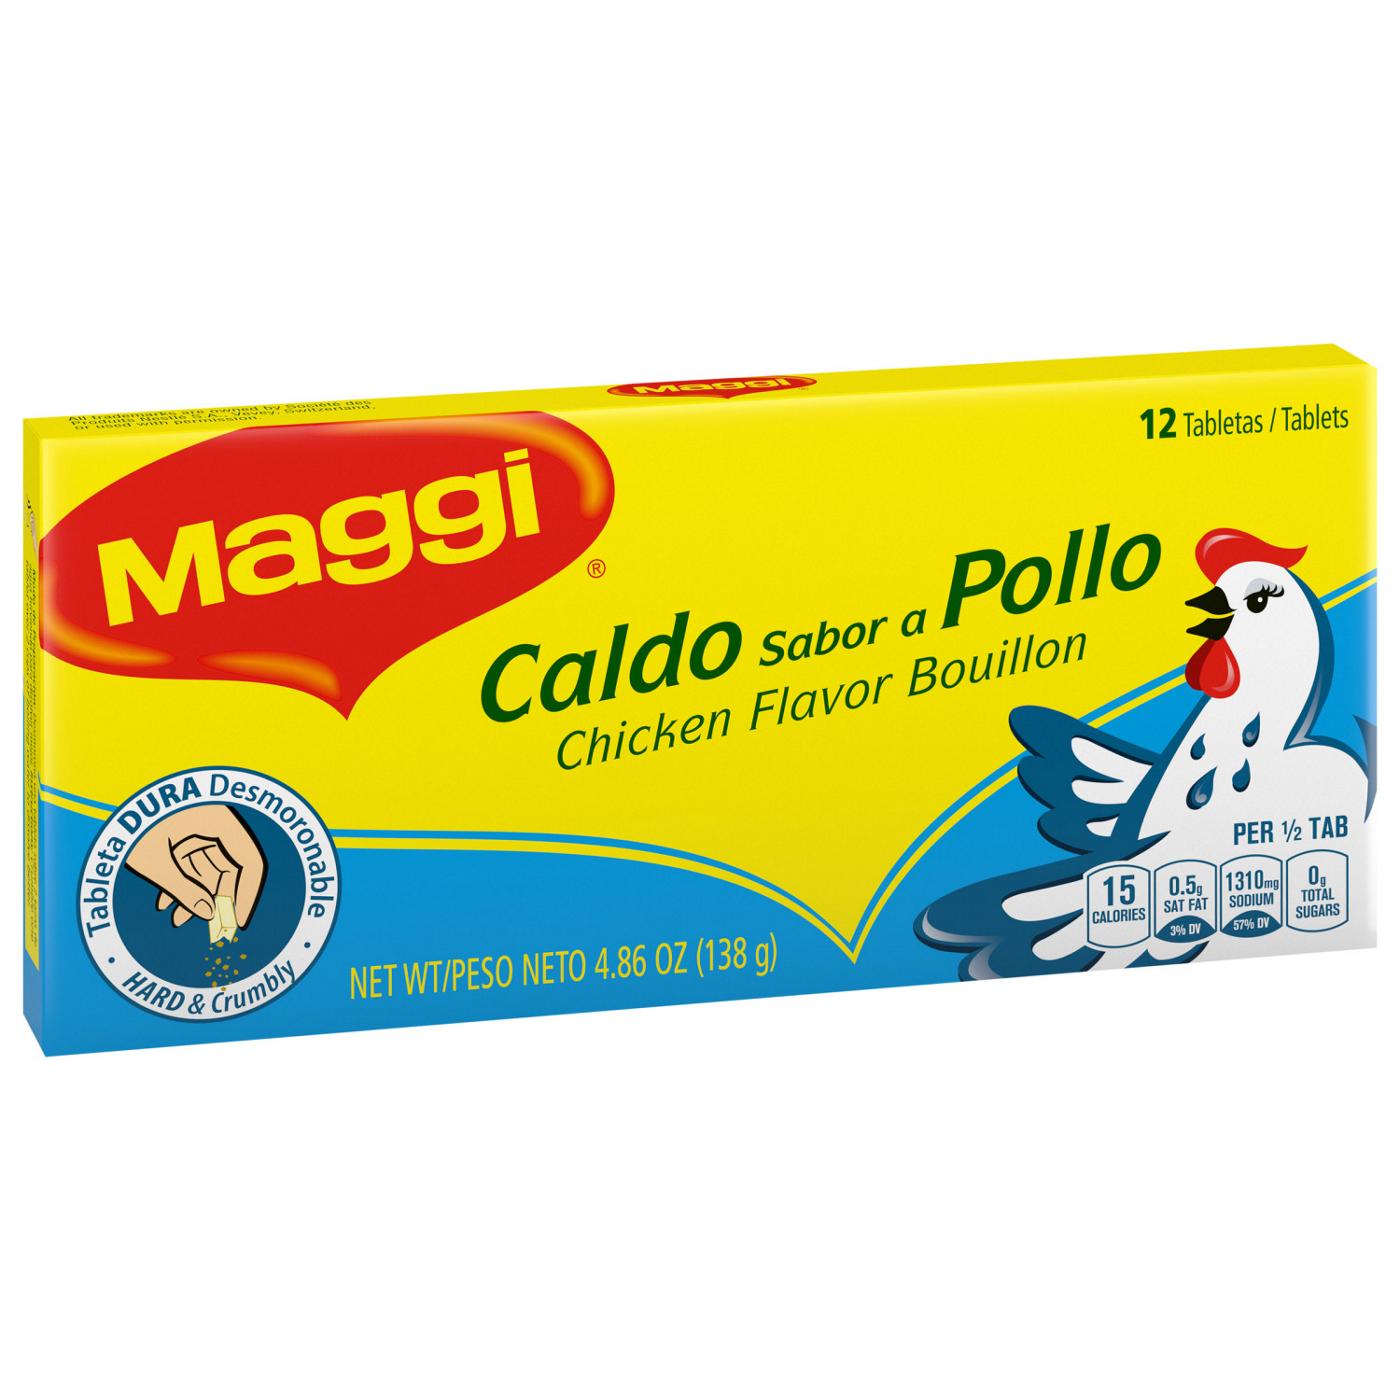 Maggi Chicken Flavor Bouillon Tablets; image 6 of 8